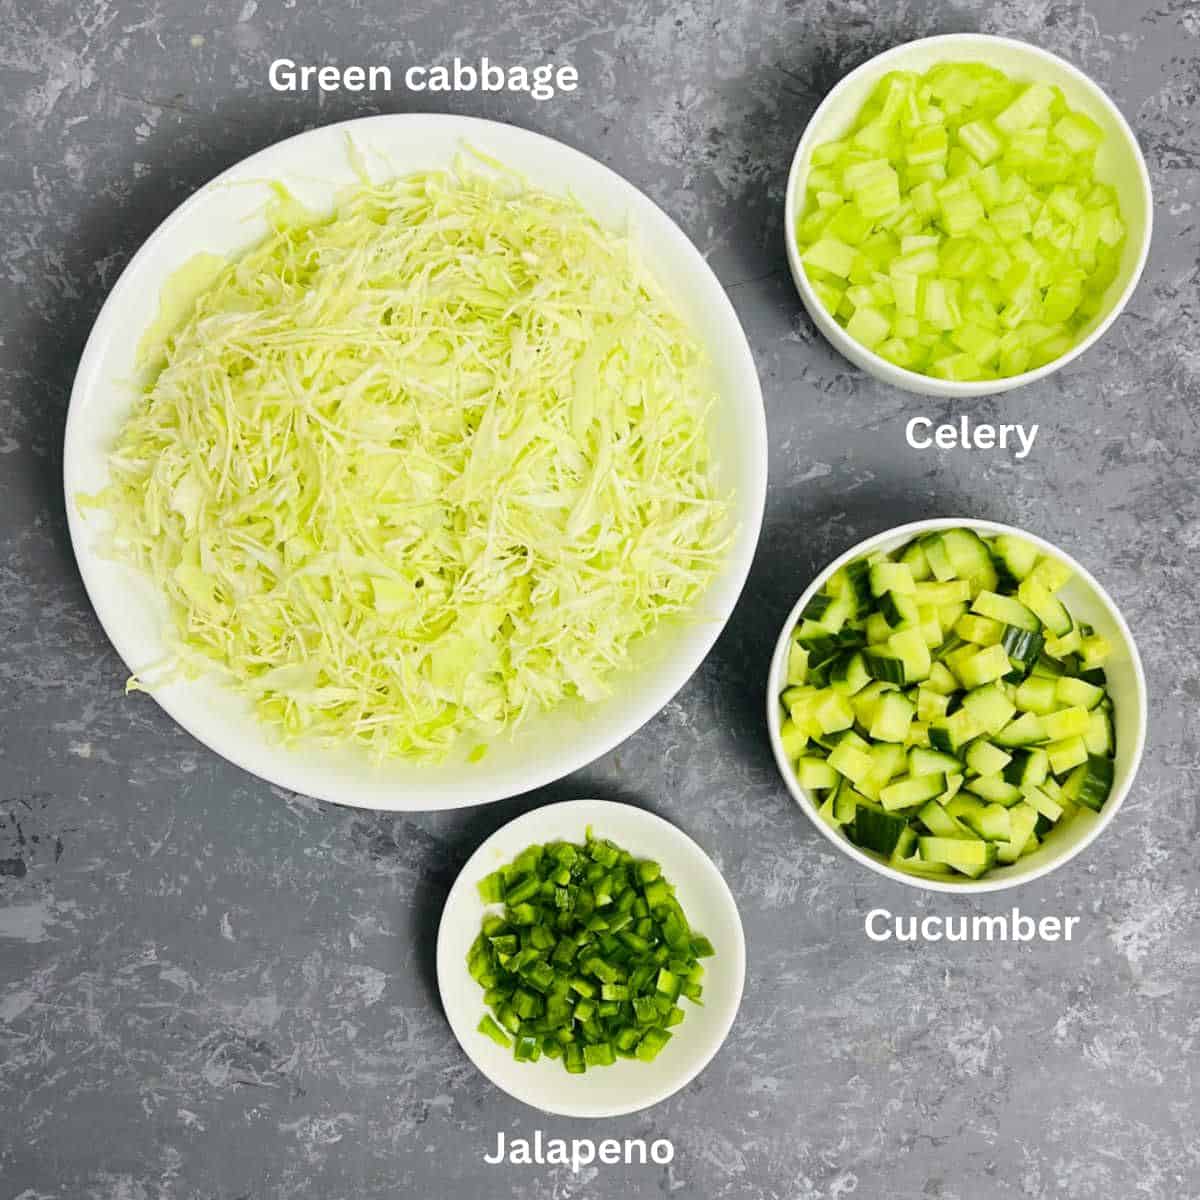 Veggies for cabbage salad.